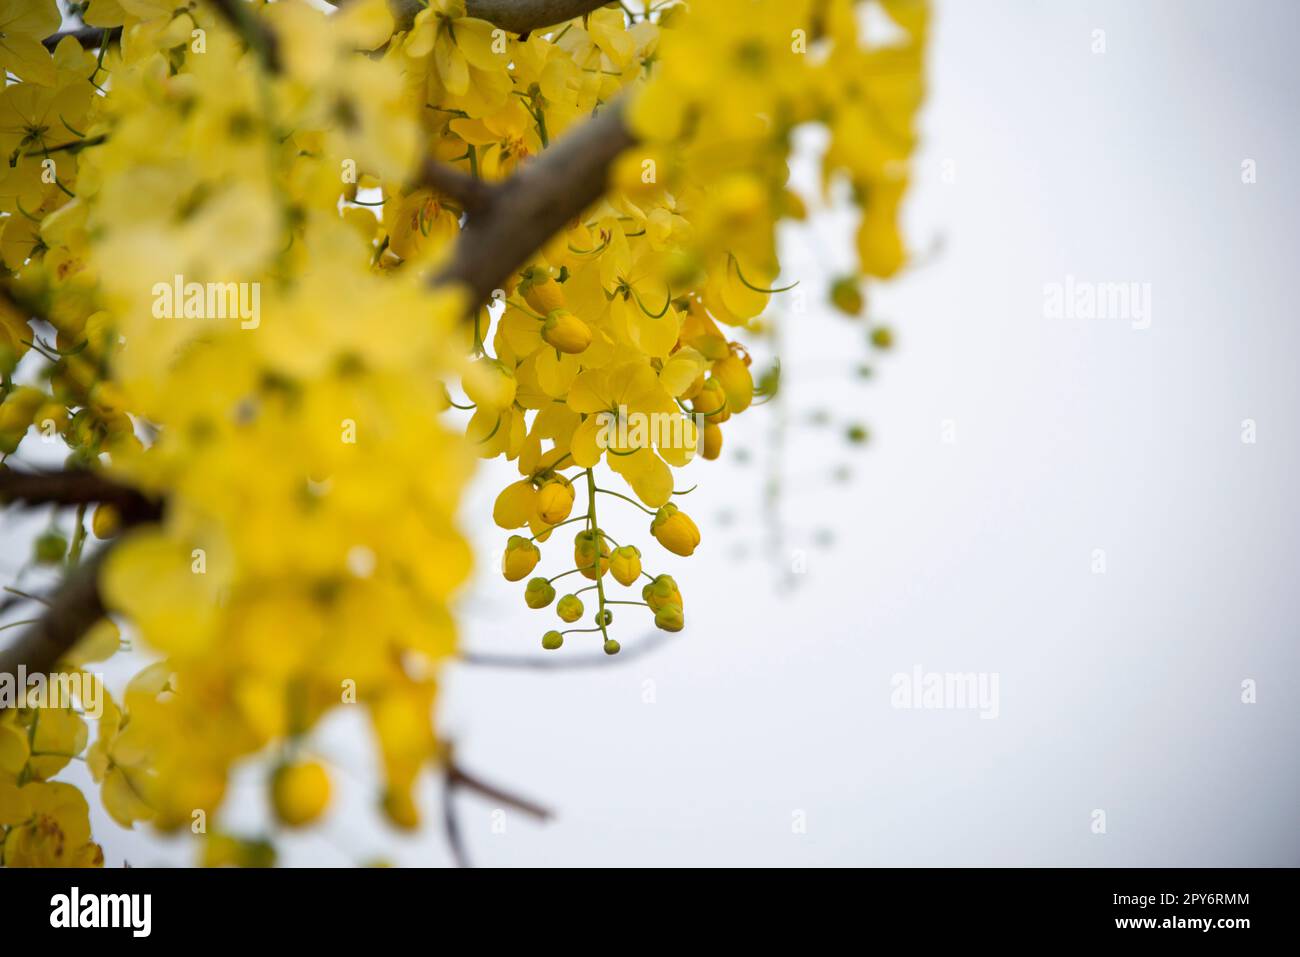 Golden shower of amaltass flowers hanging on trees. Stock Photo